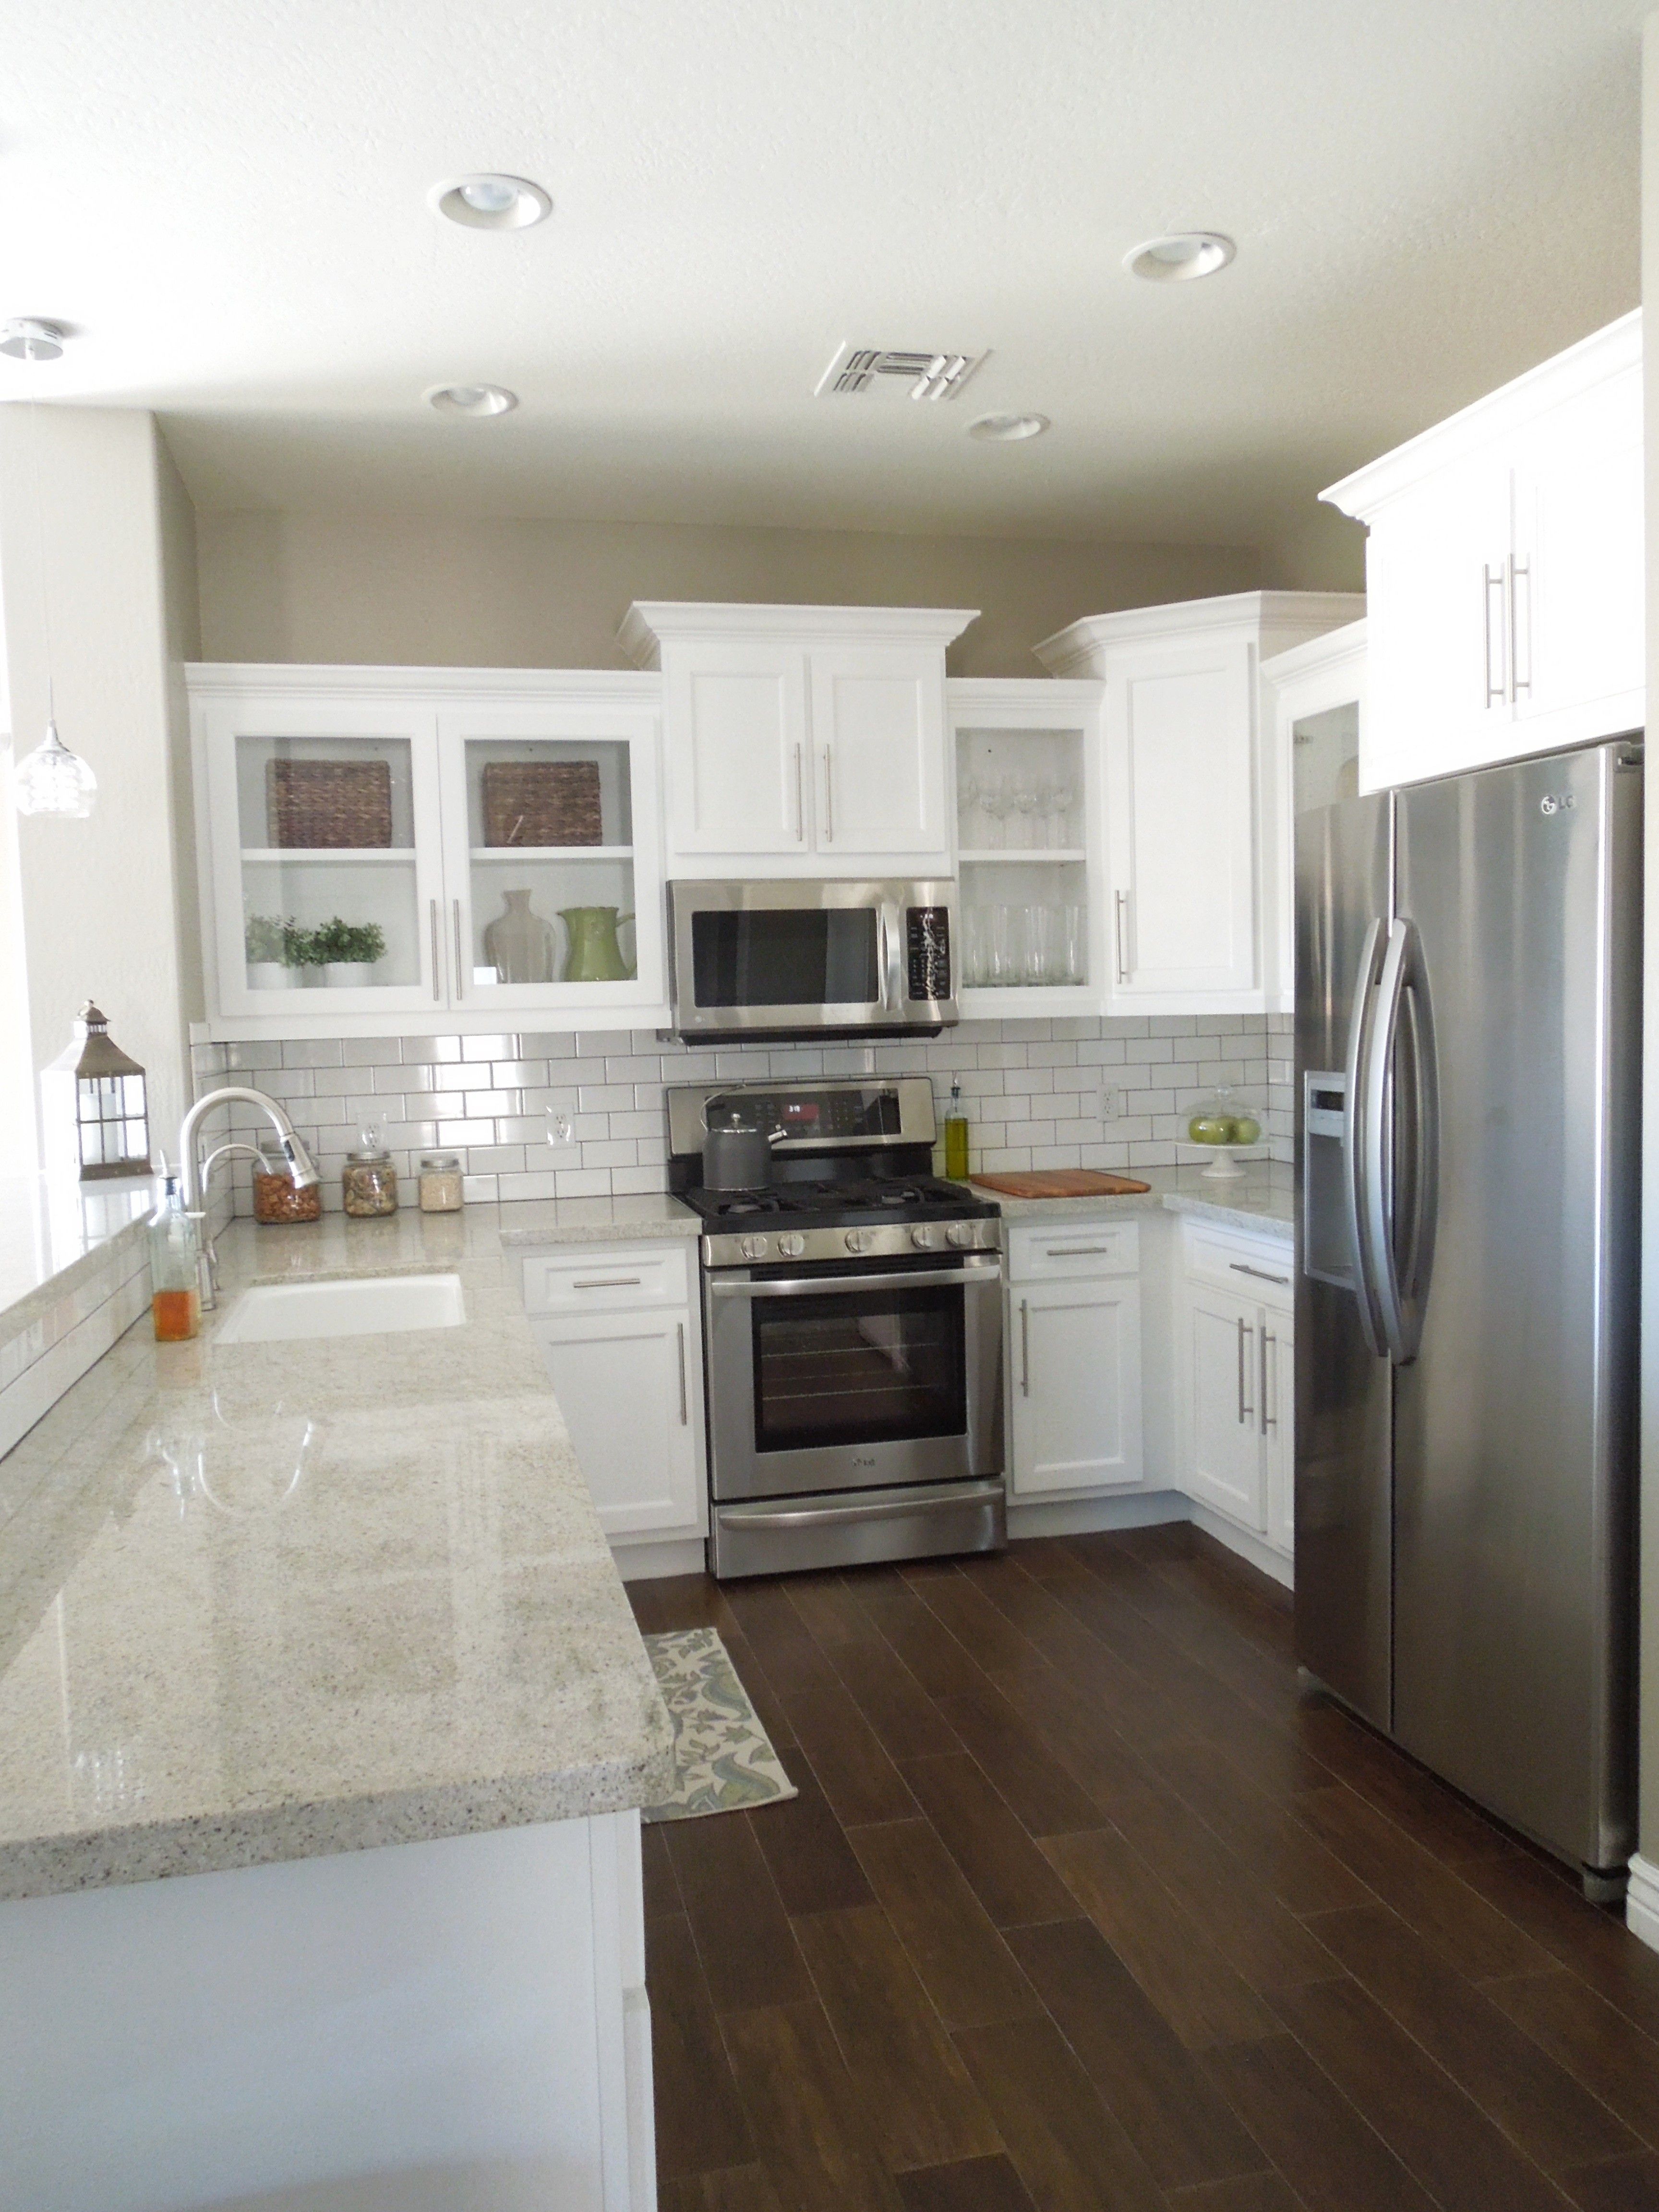 Next house…white cabinets, white backsplash, gray granite and wood tile floors. Love this remodel.